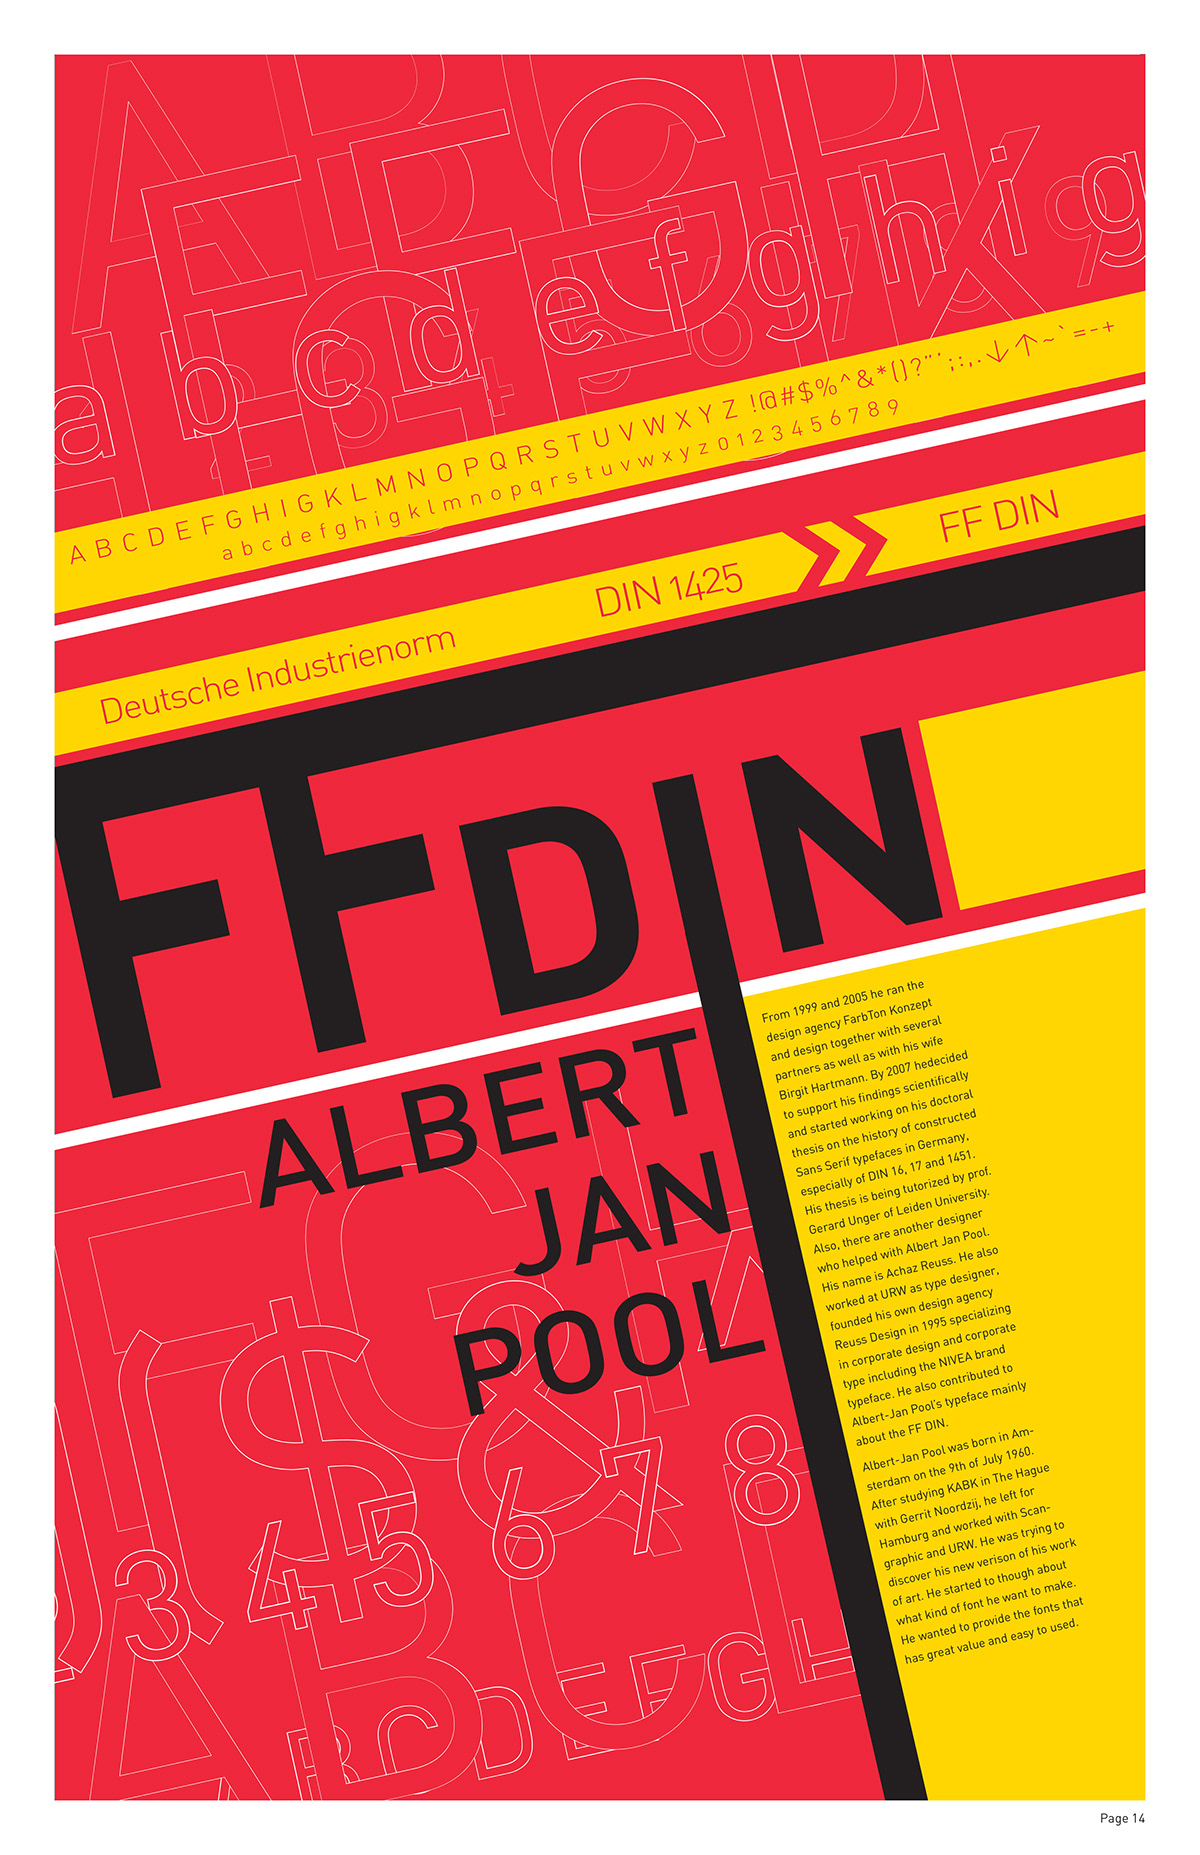 corcoran FFDIN typographer Albert-JanPool